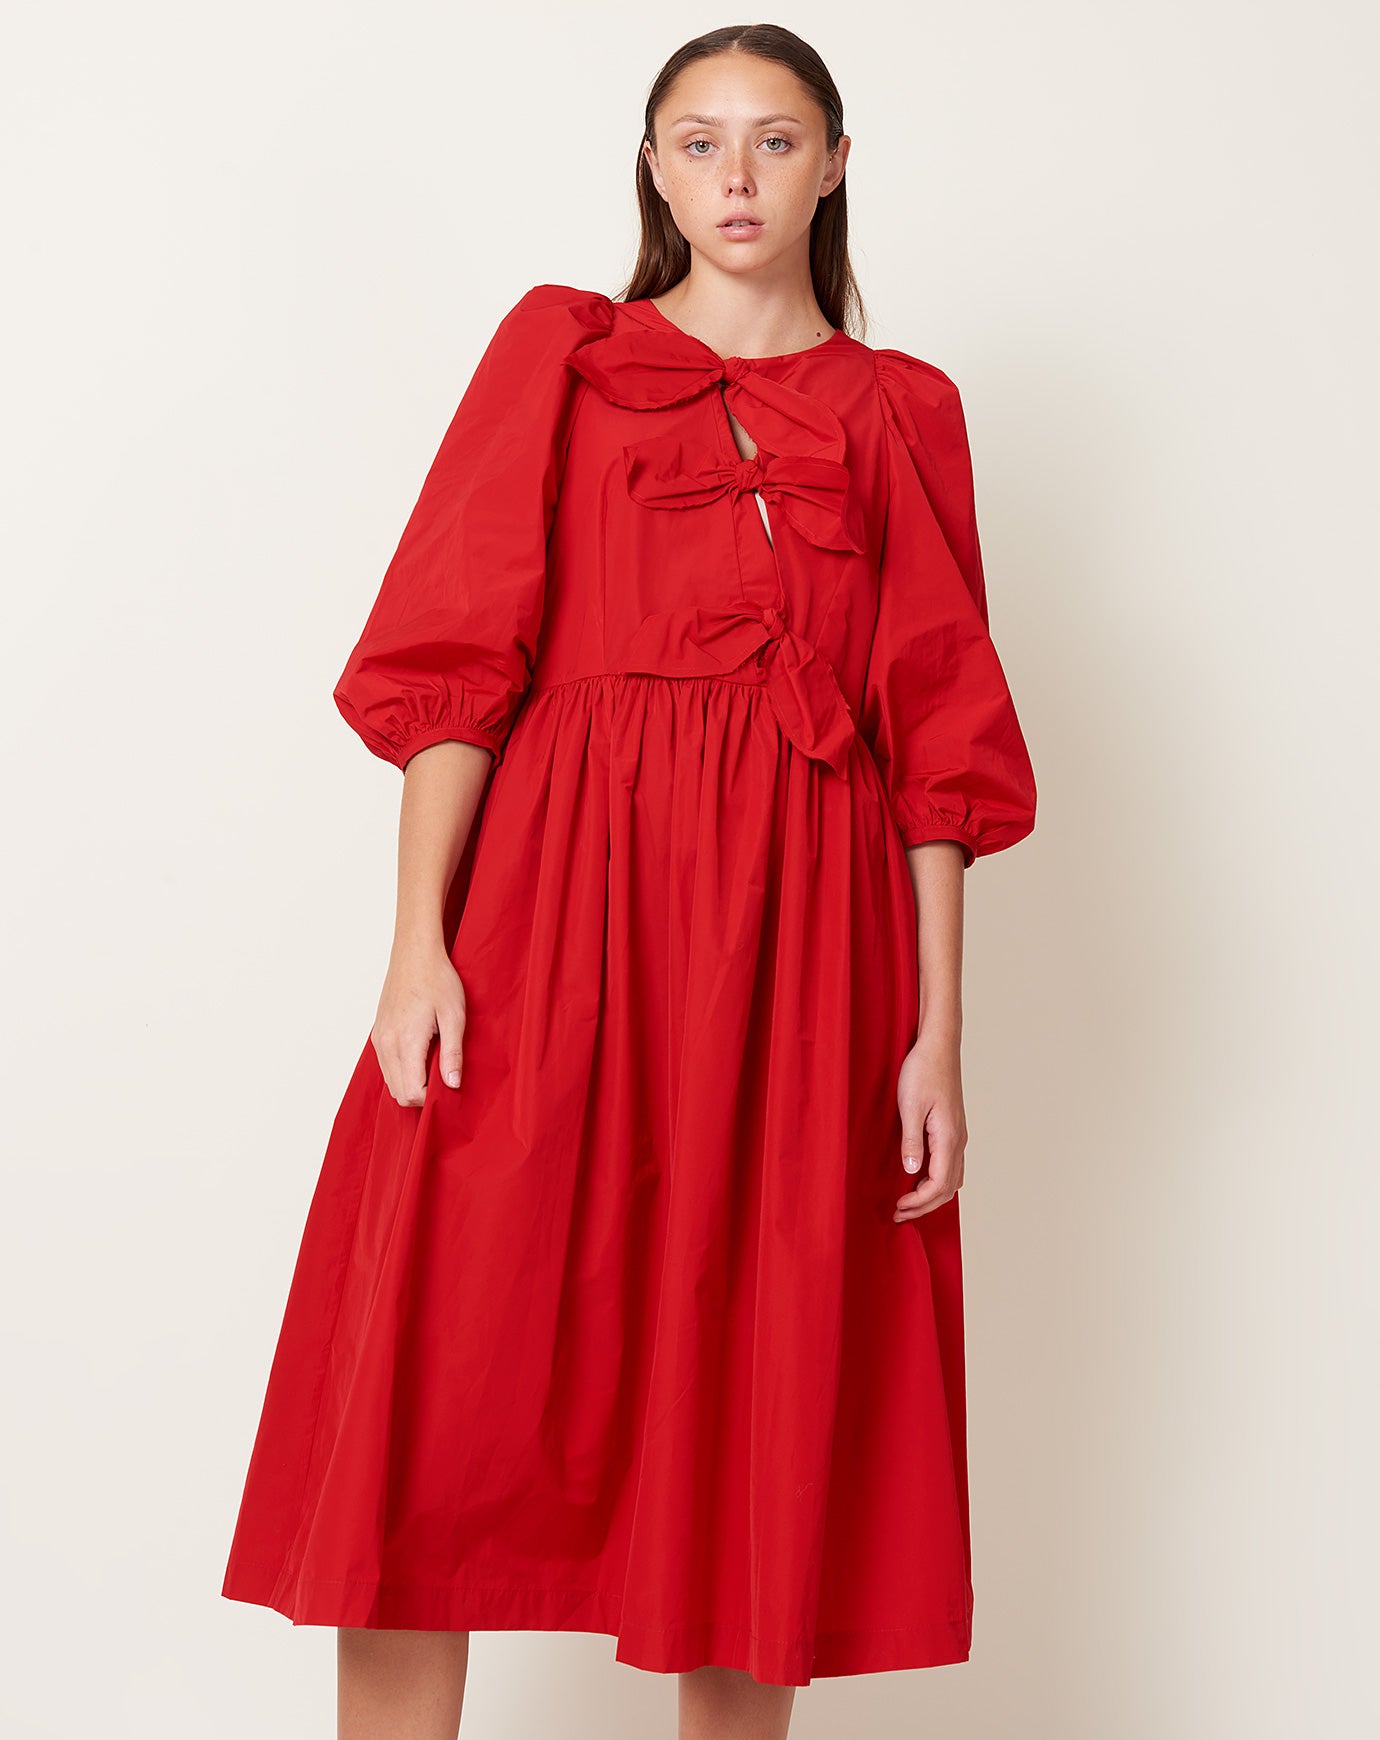 Fabiana Pigna Palau Dress in Scarlet